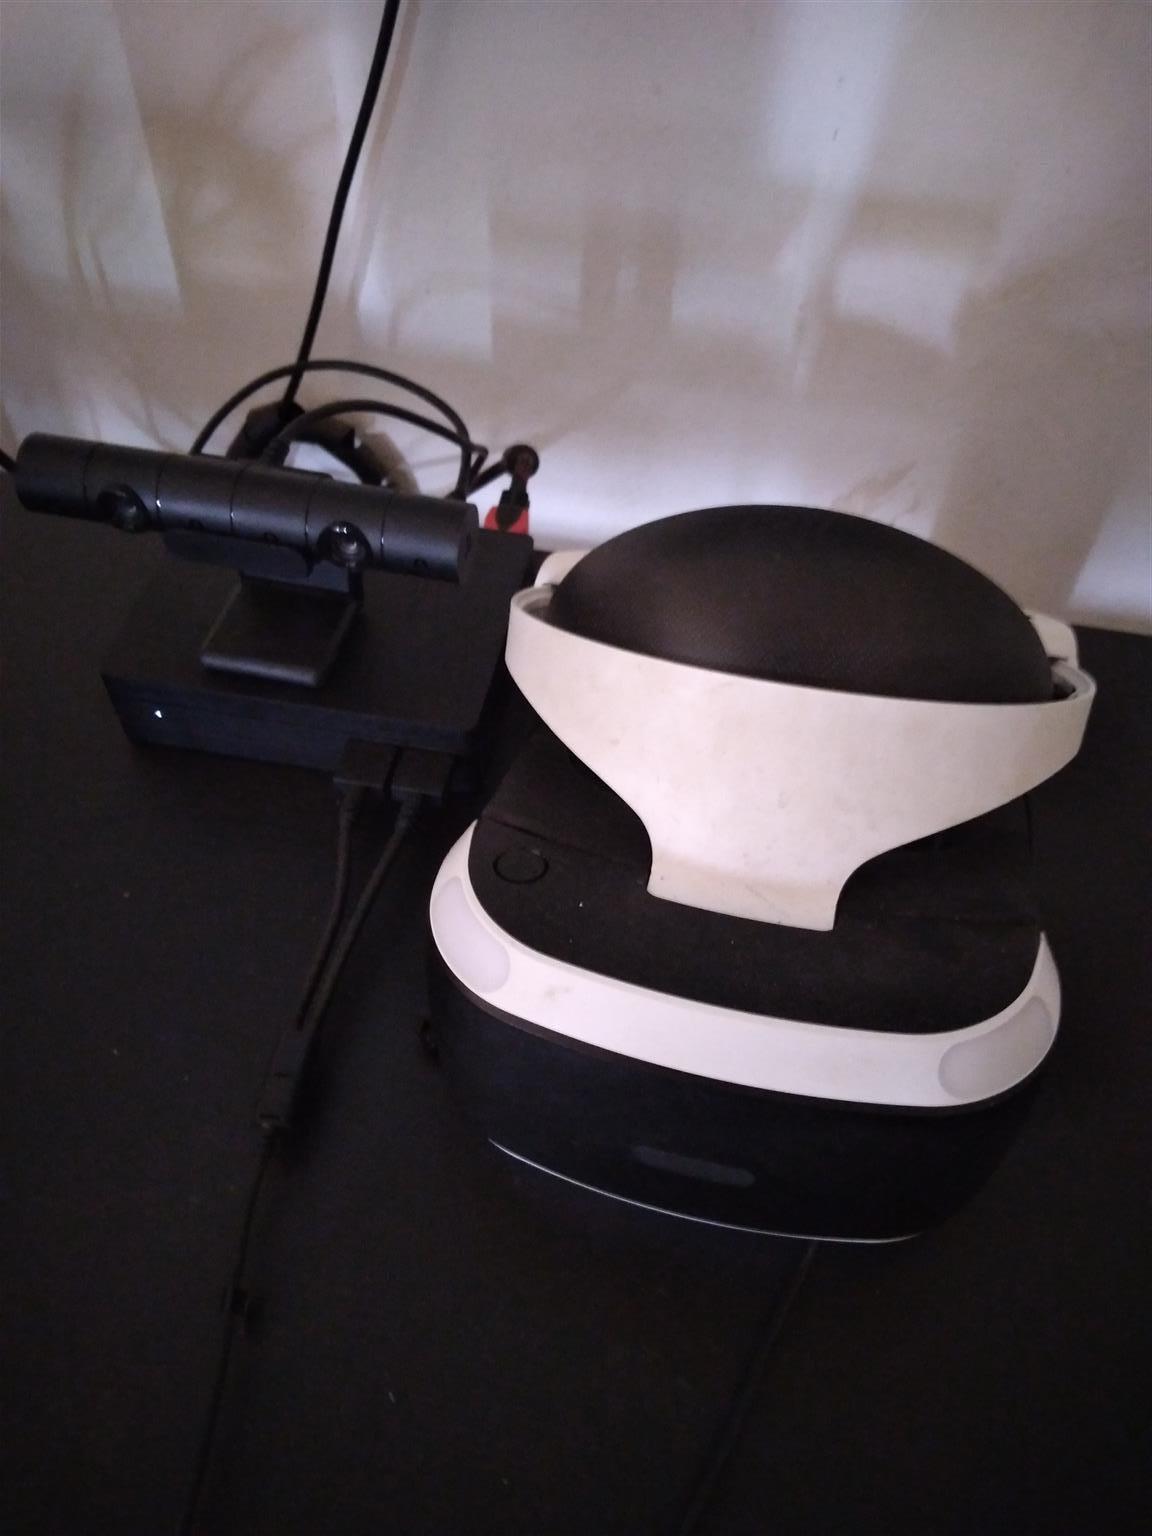 Ps4 Virtual reality head set combo